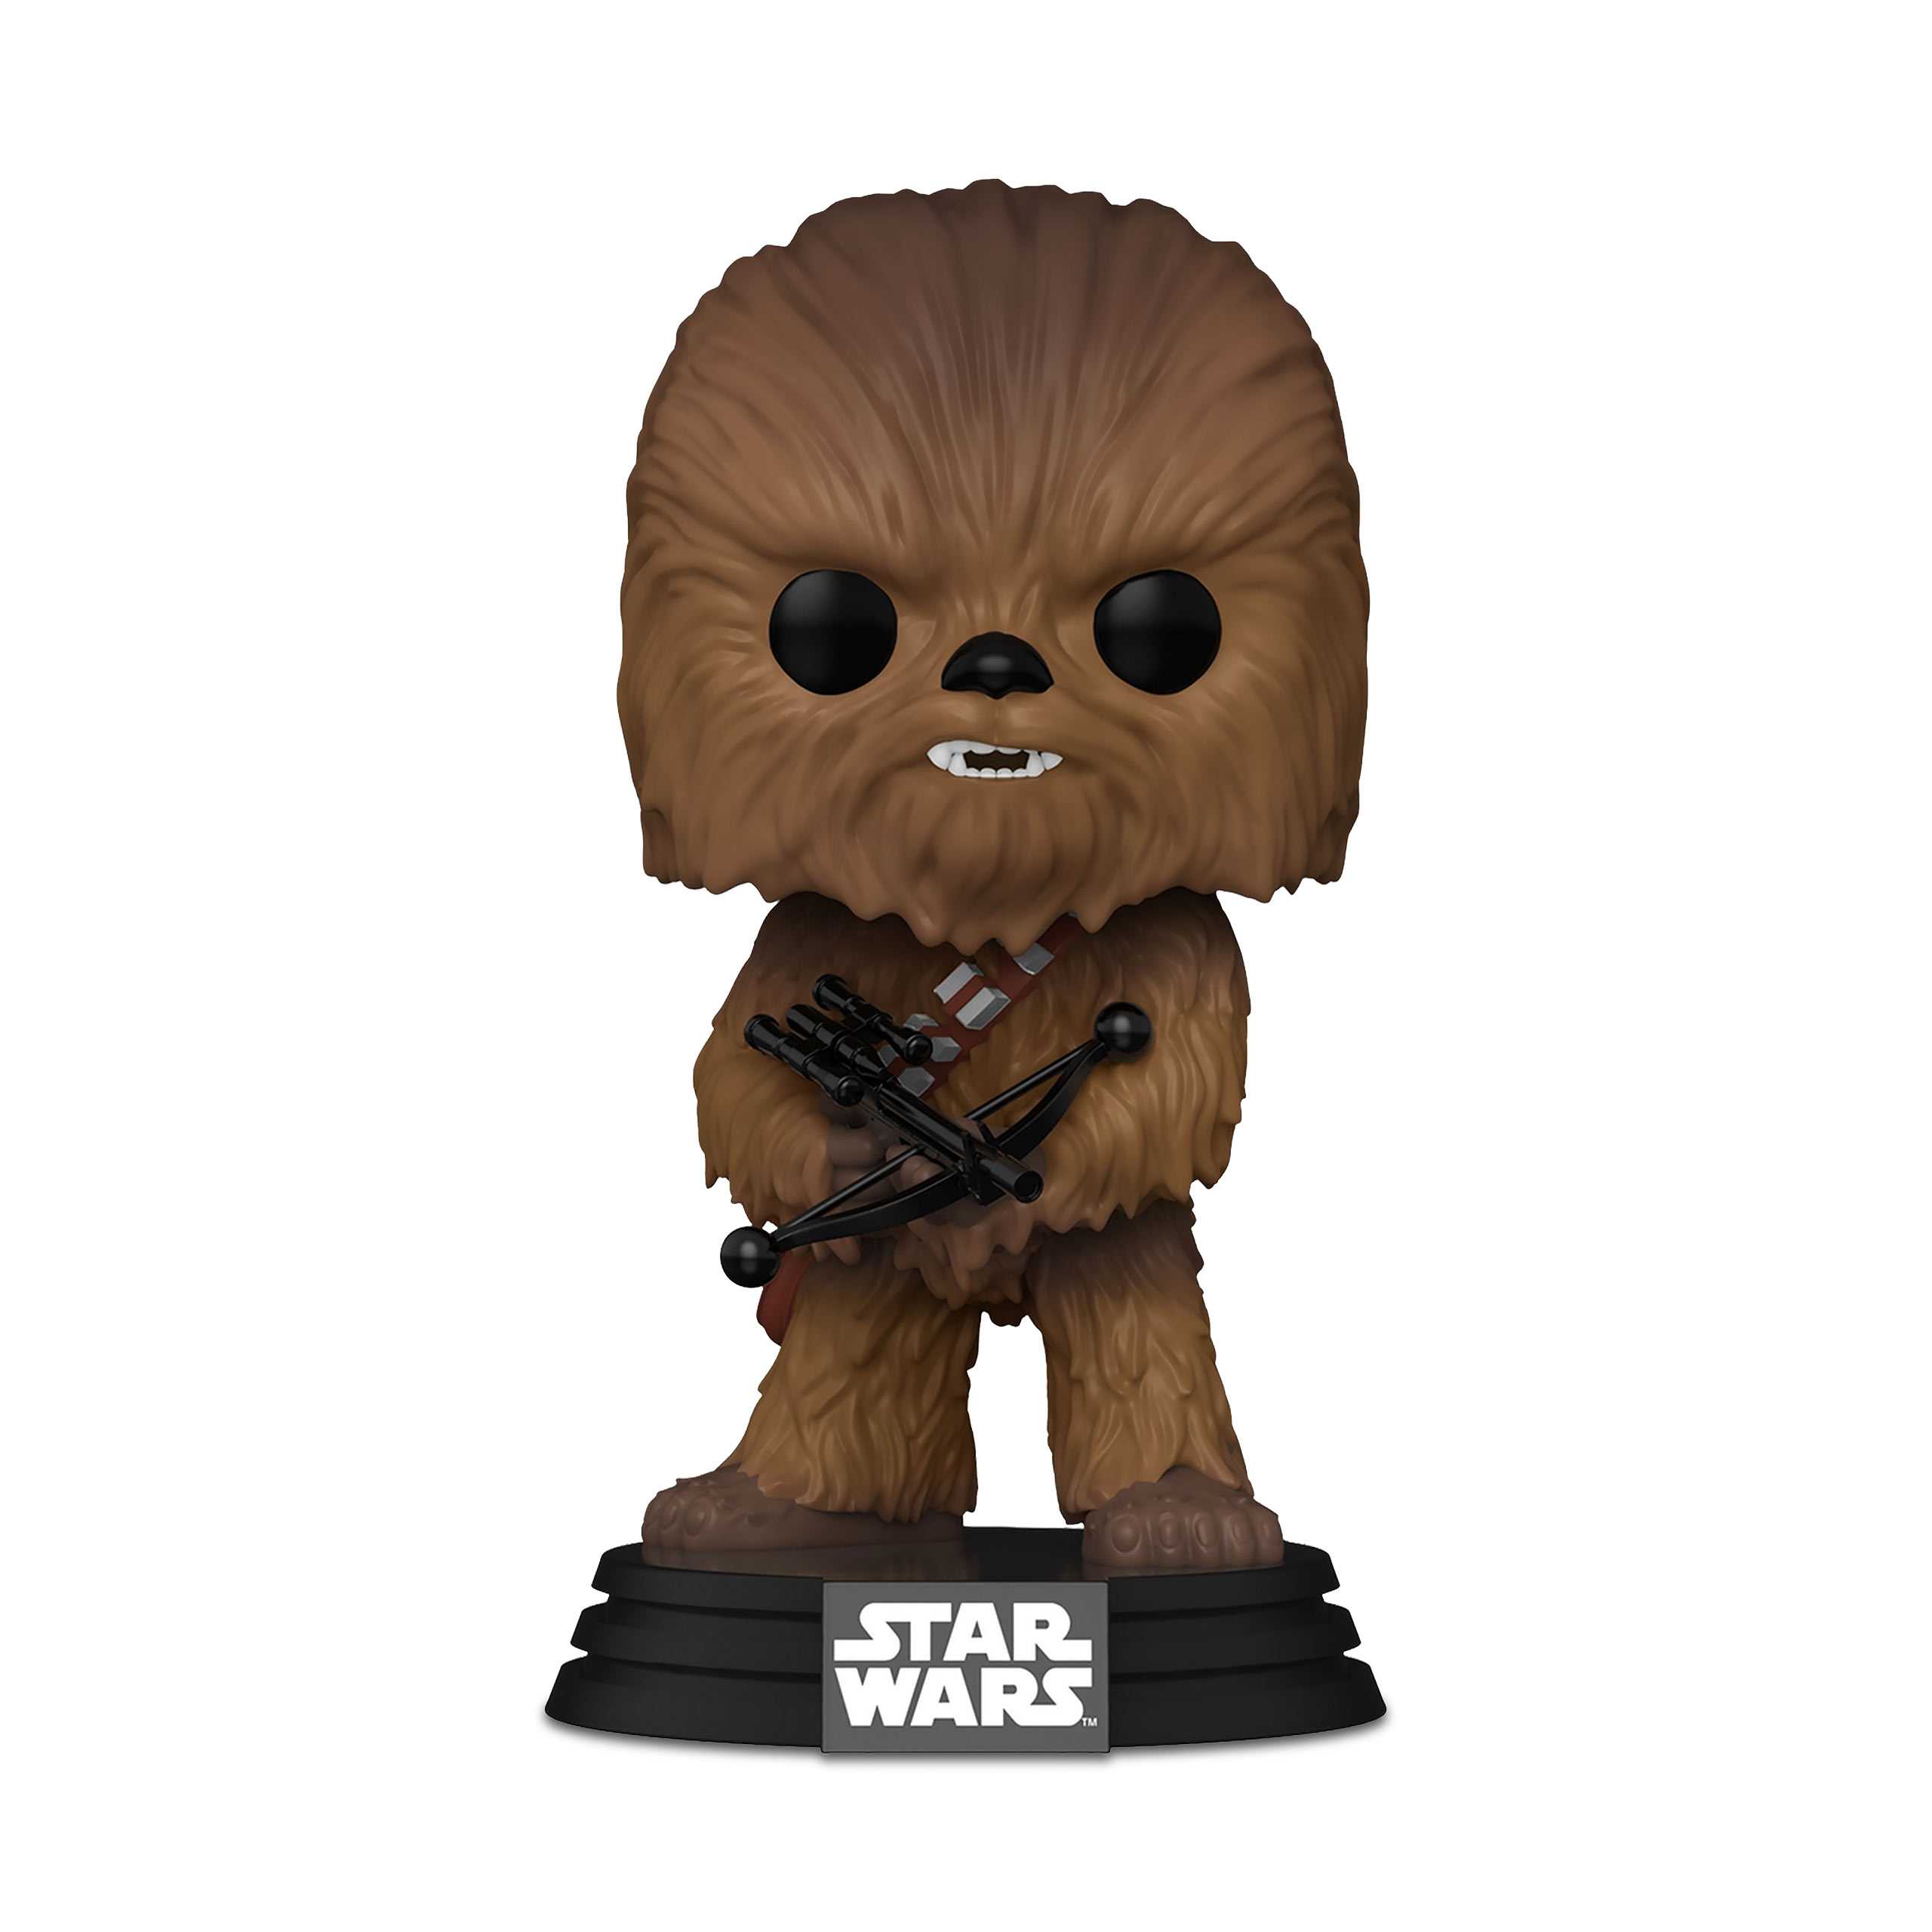 Star Wars - Chewbacca Funko Pop Bobblehead Figure